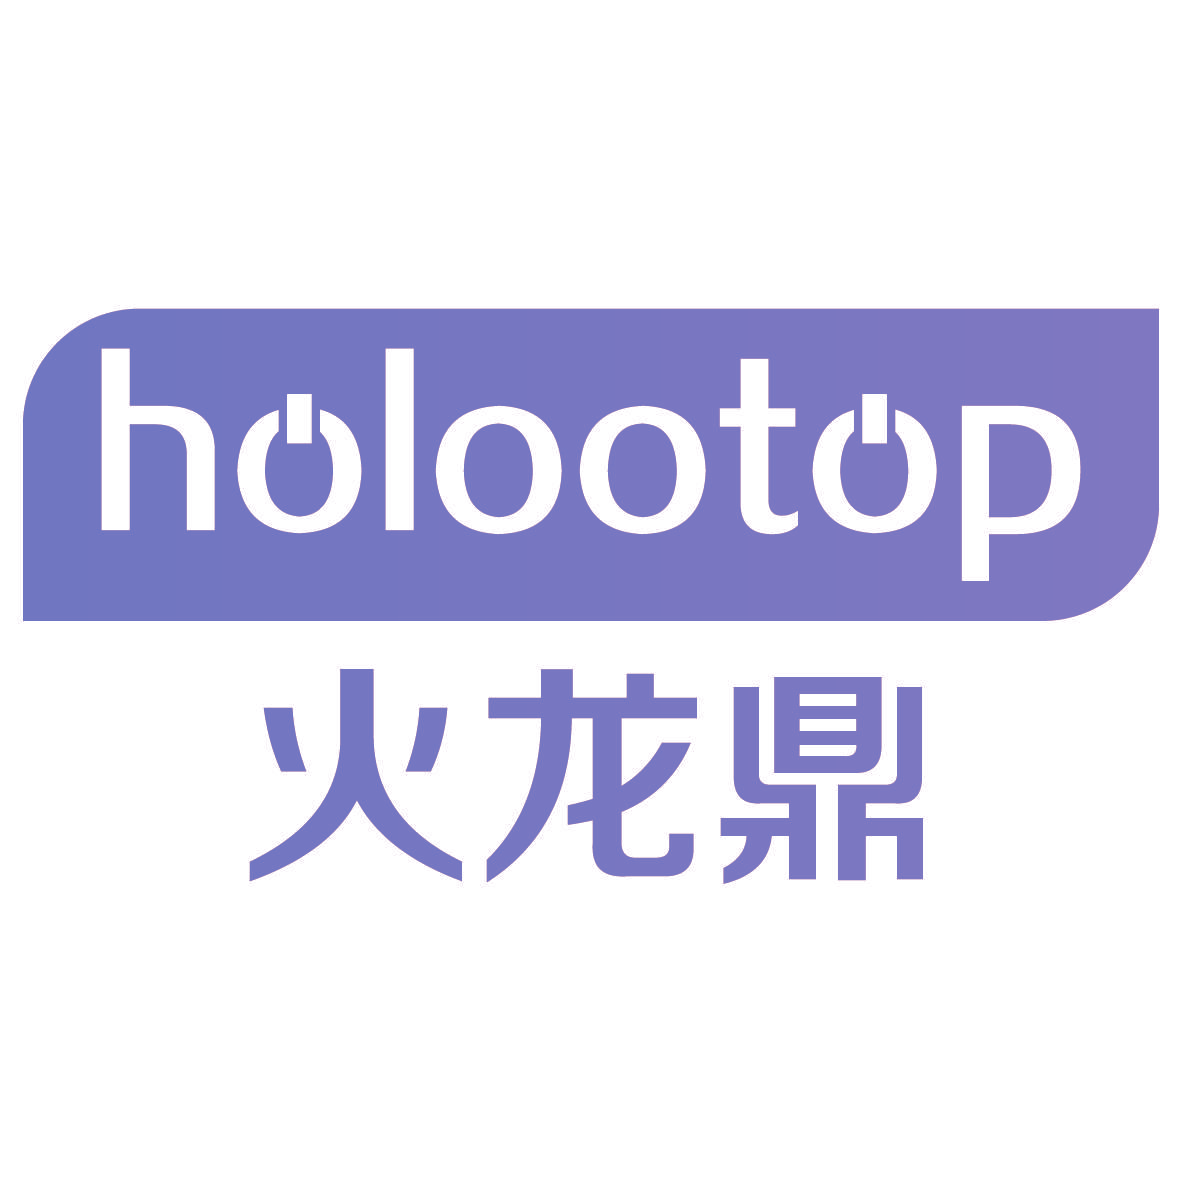 火龙鼎 HOLOOTOP